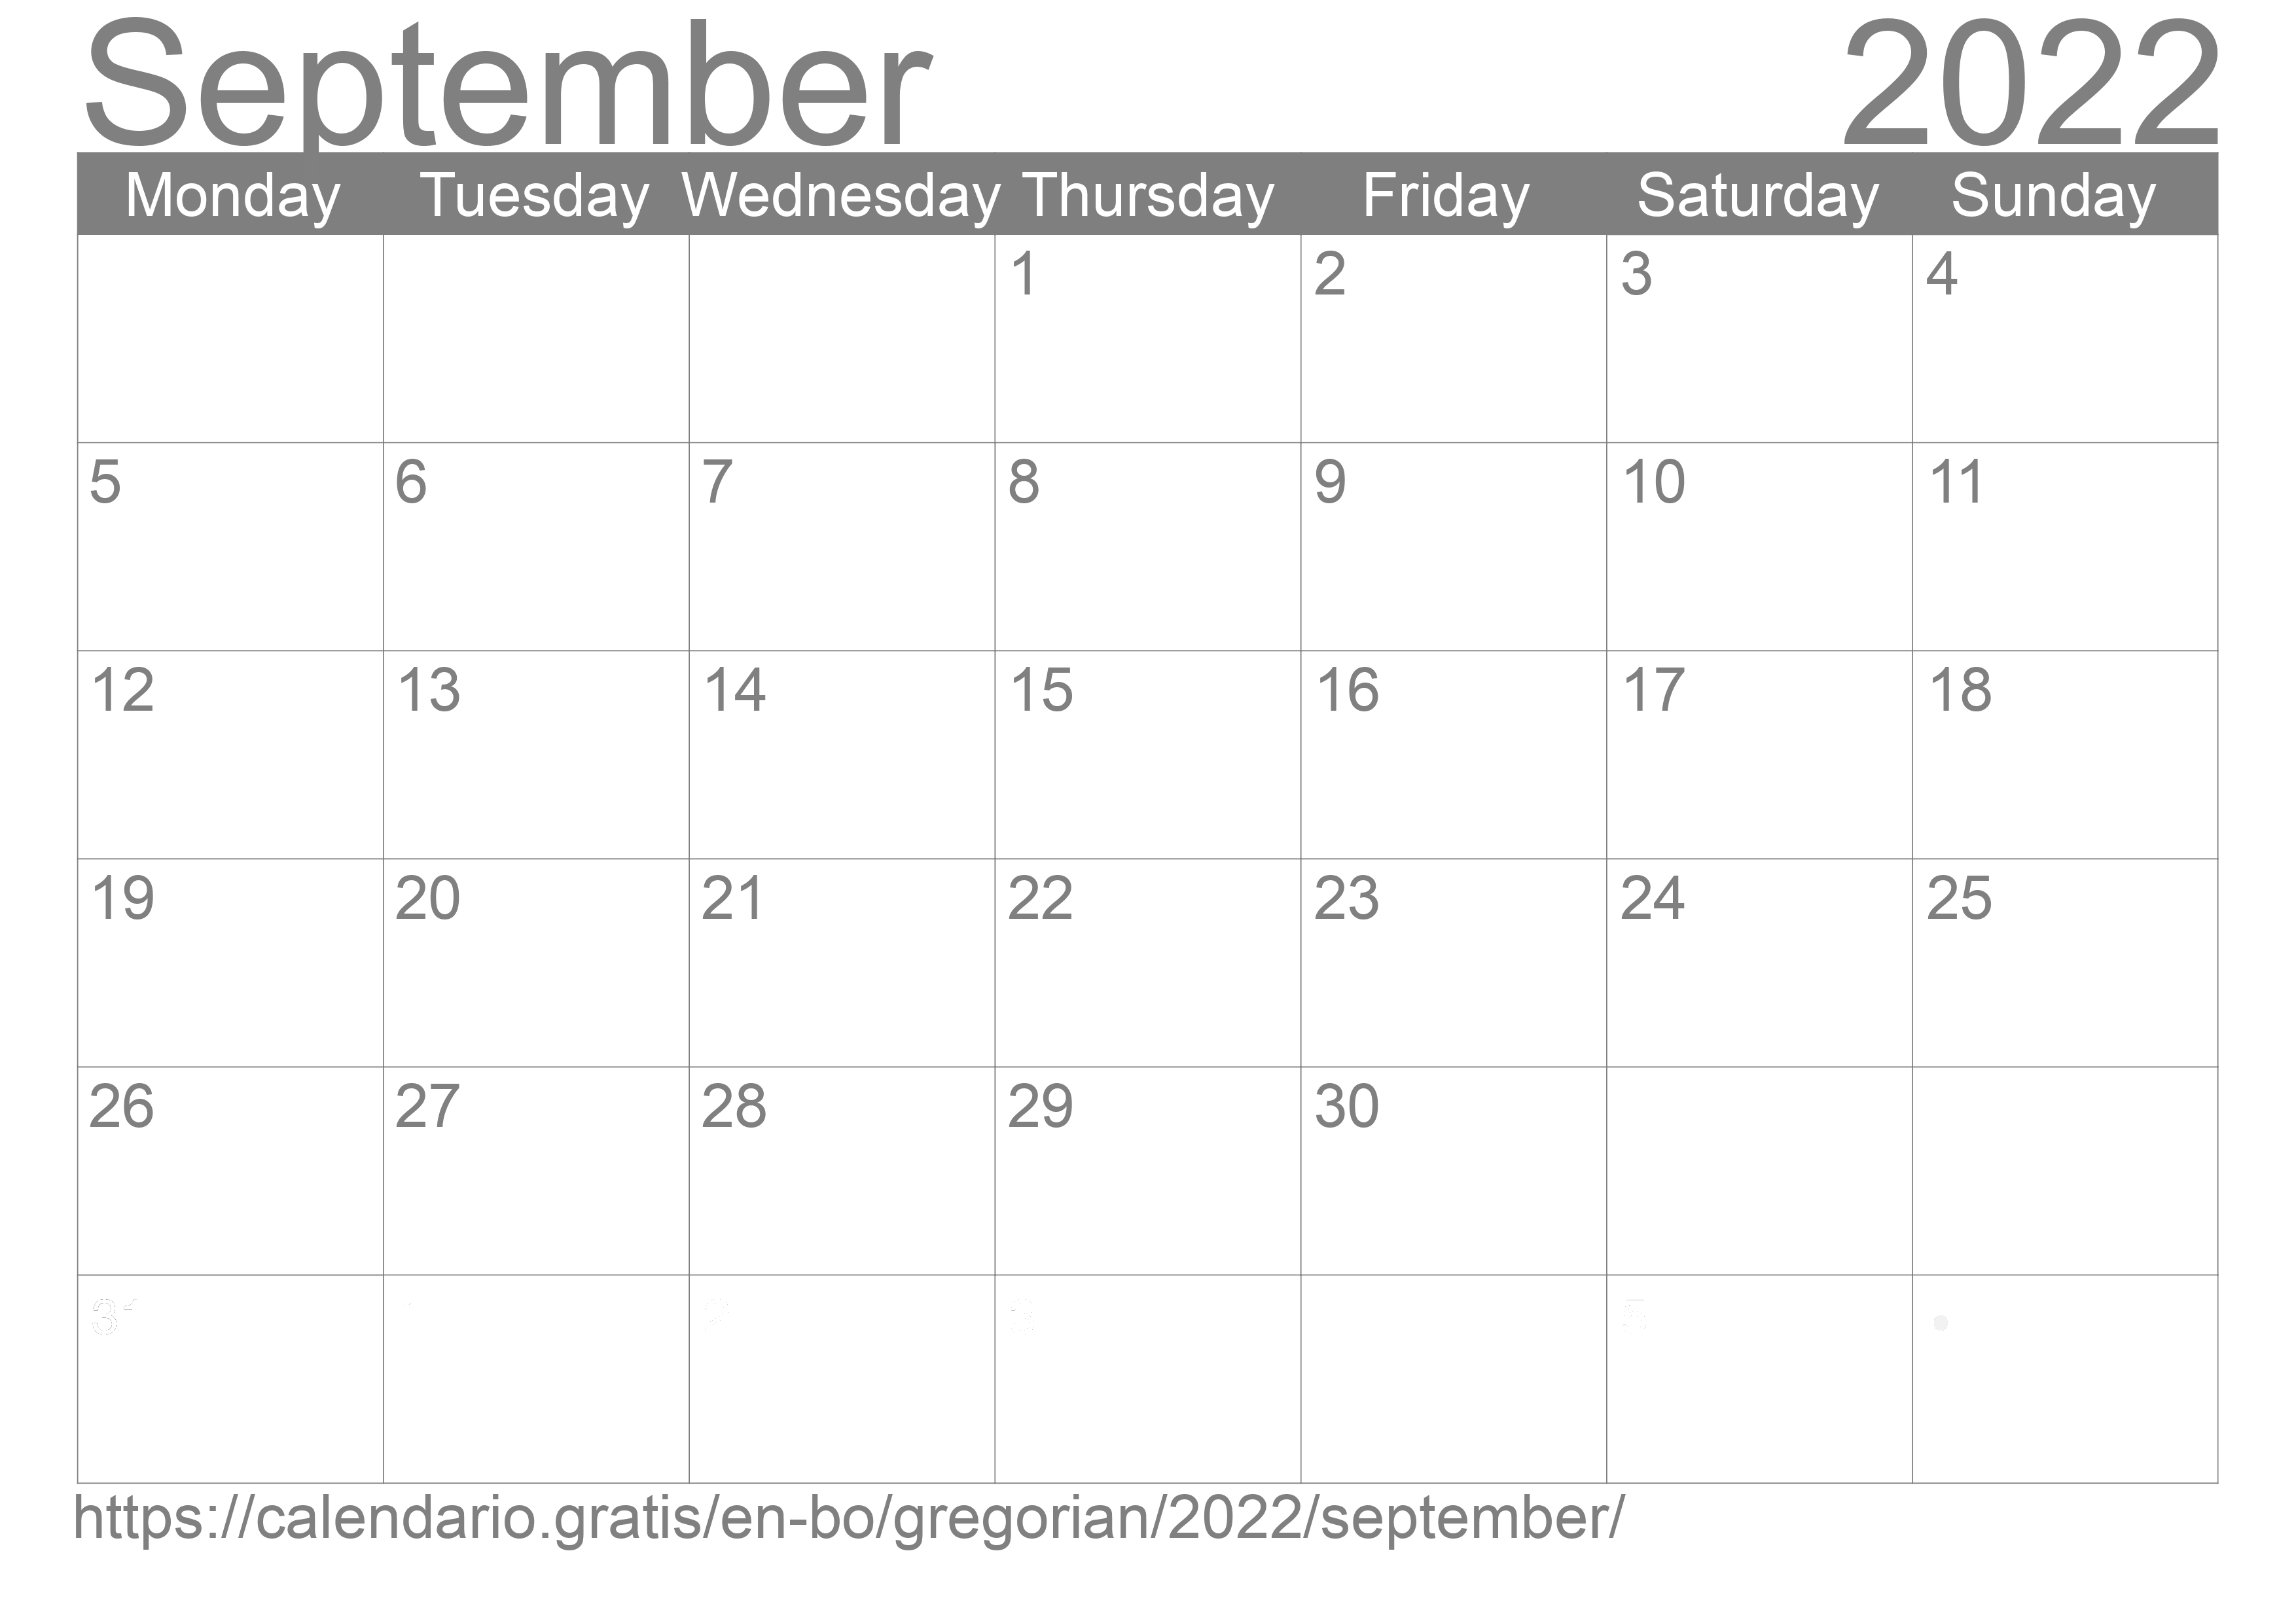 Calendar September 2022 to print